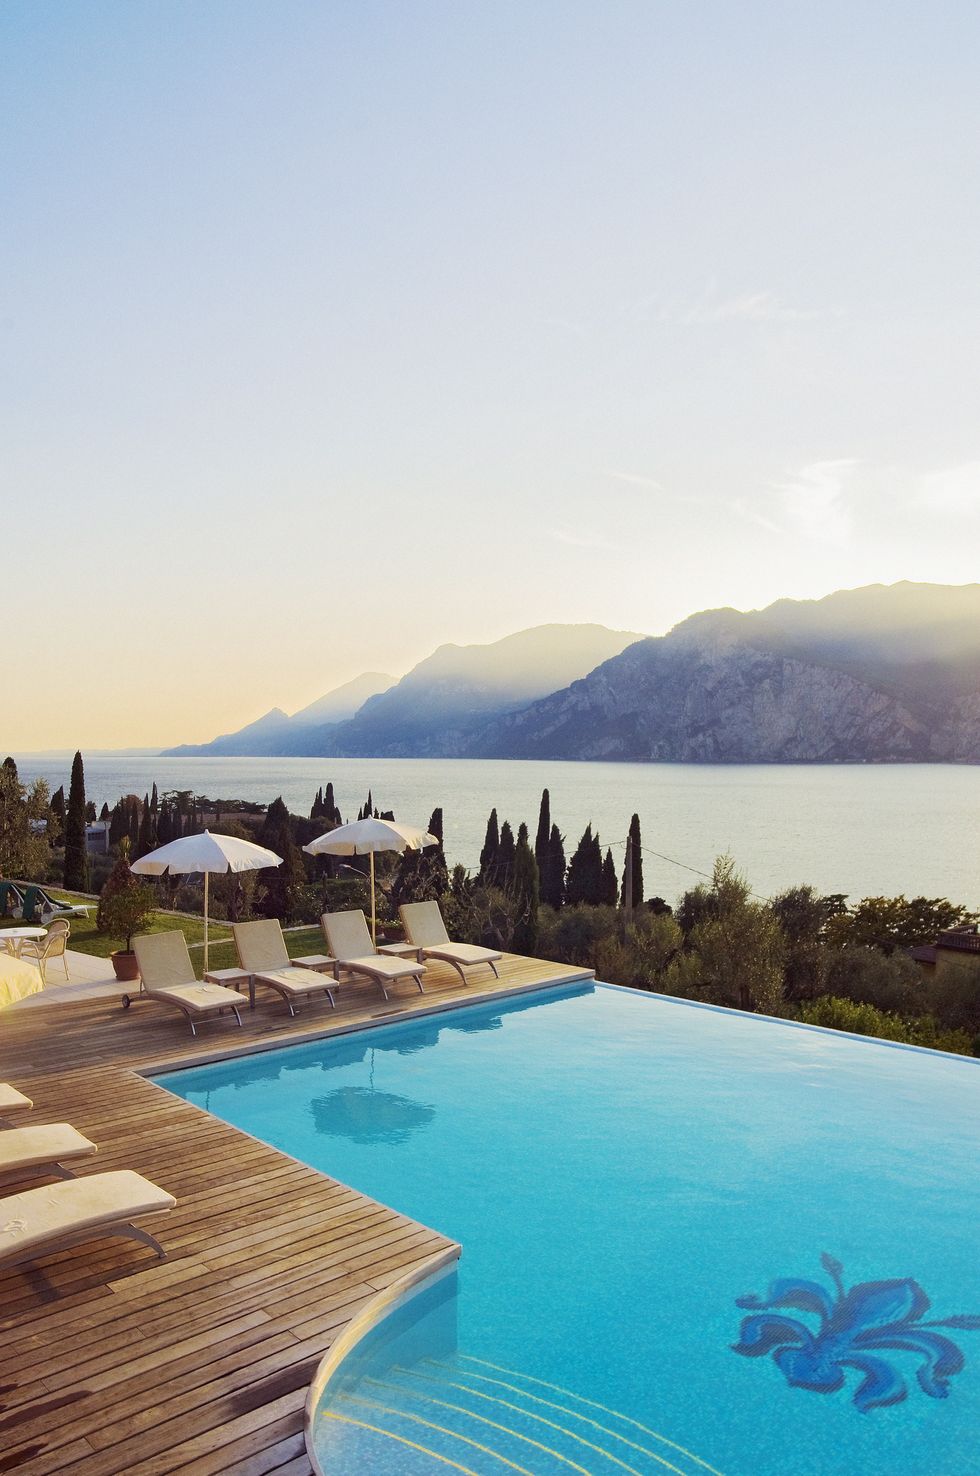 The pool at Hotel Bellevue San Lorenzo on Garda Lake in Italy